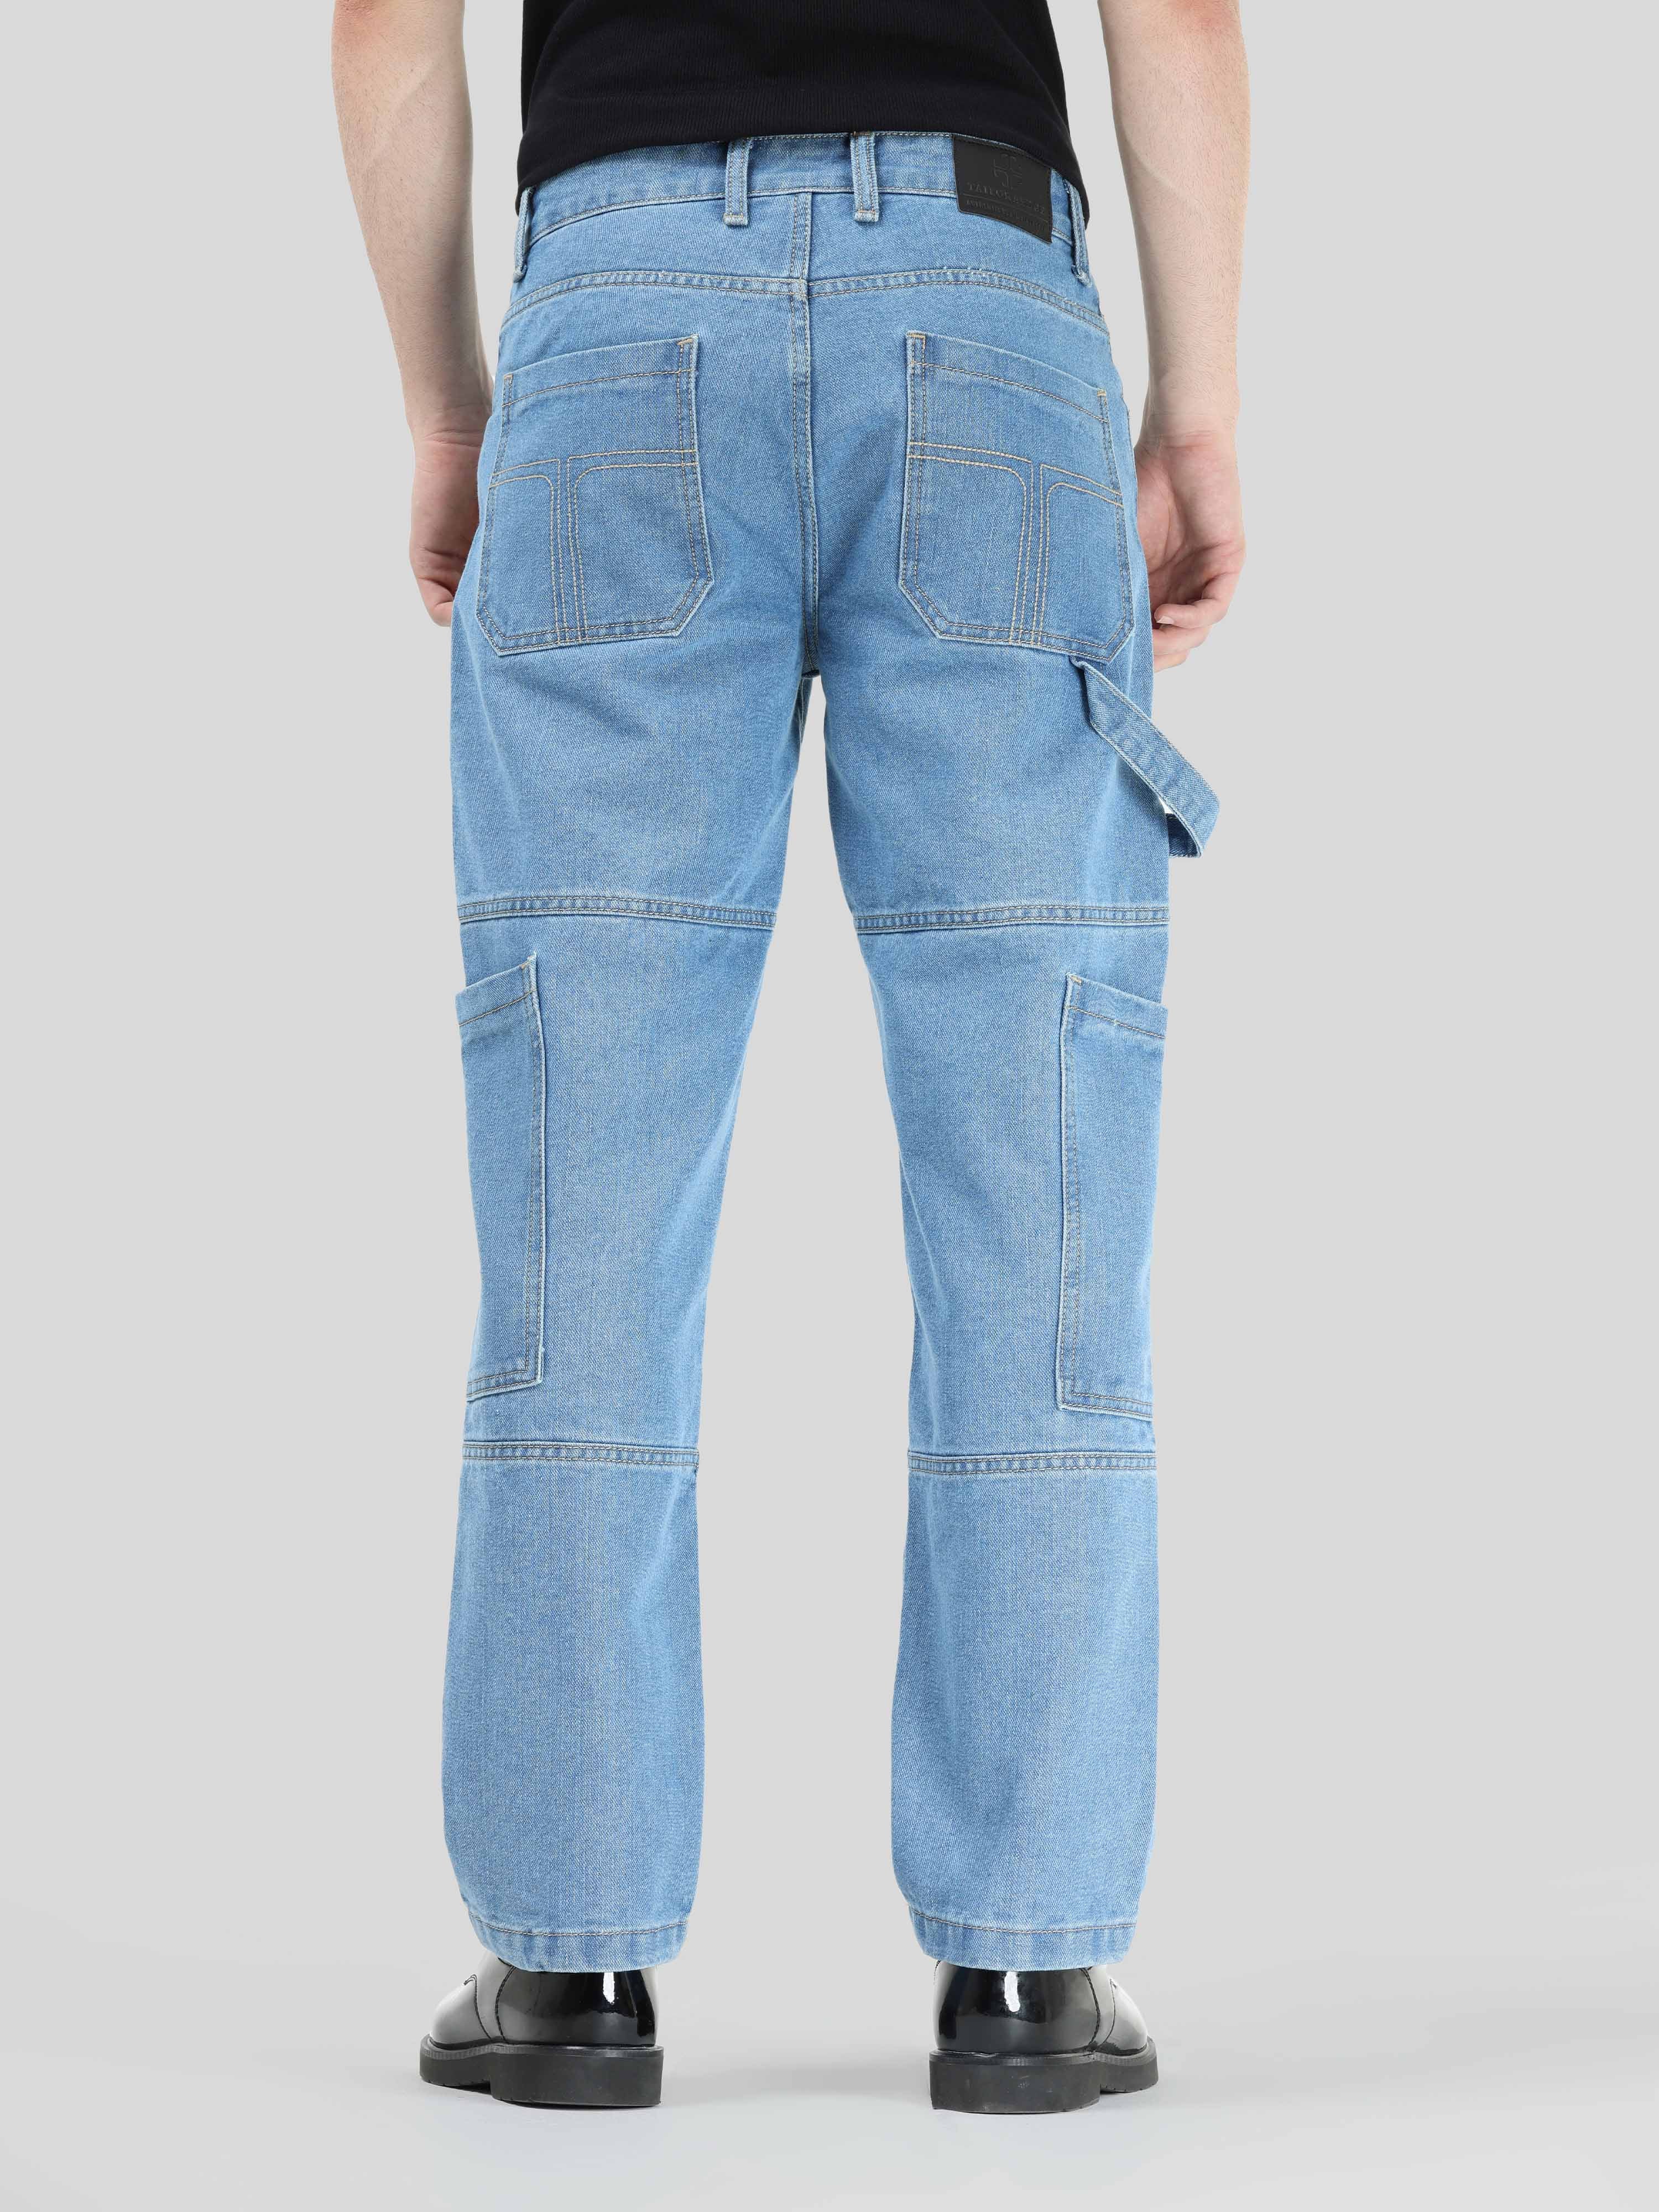 42 44 Plus Size Jeans Men Denim Pants Baggy Jeans Cargo Pants Loose Fashion  Causal Trousers Male Big Size Bottoms - AliExpress